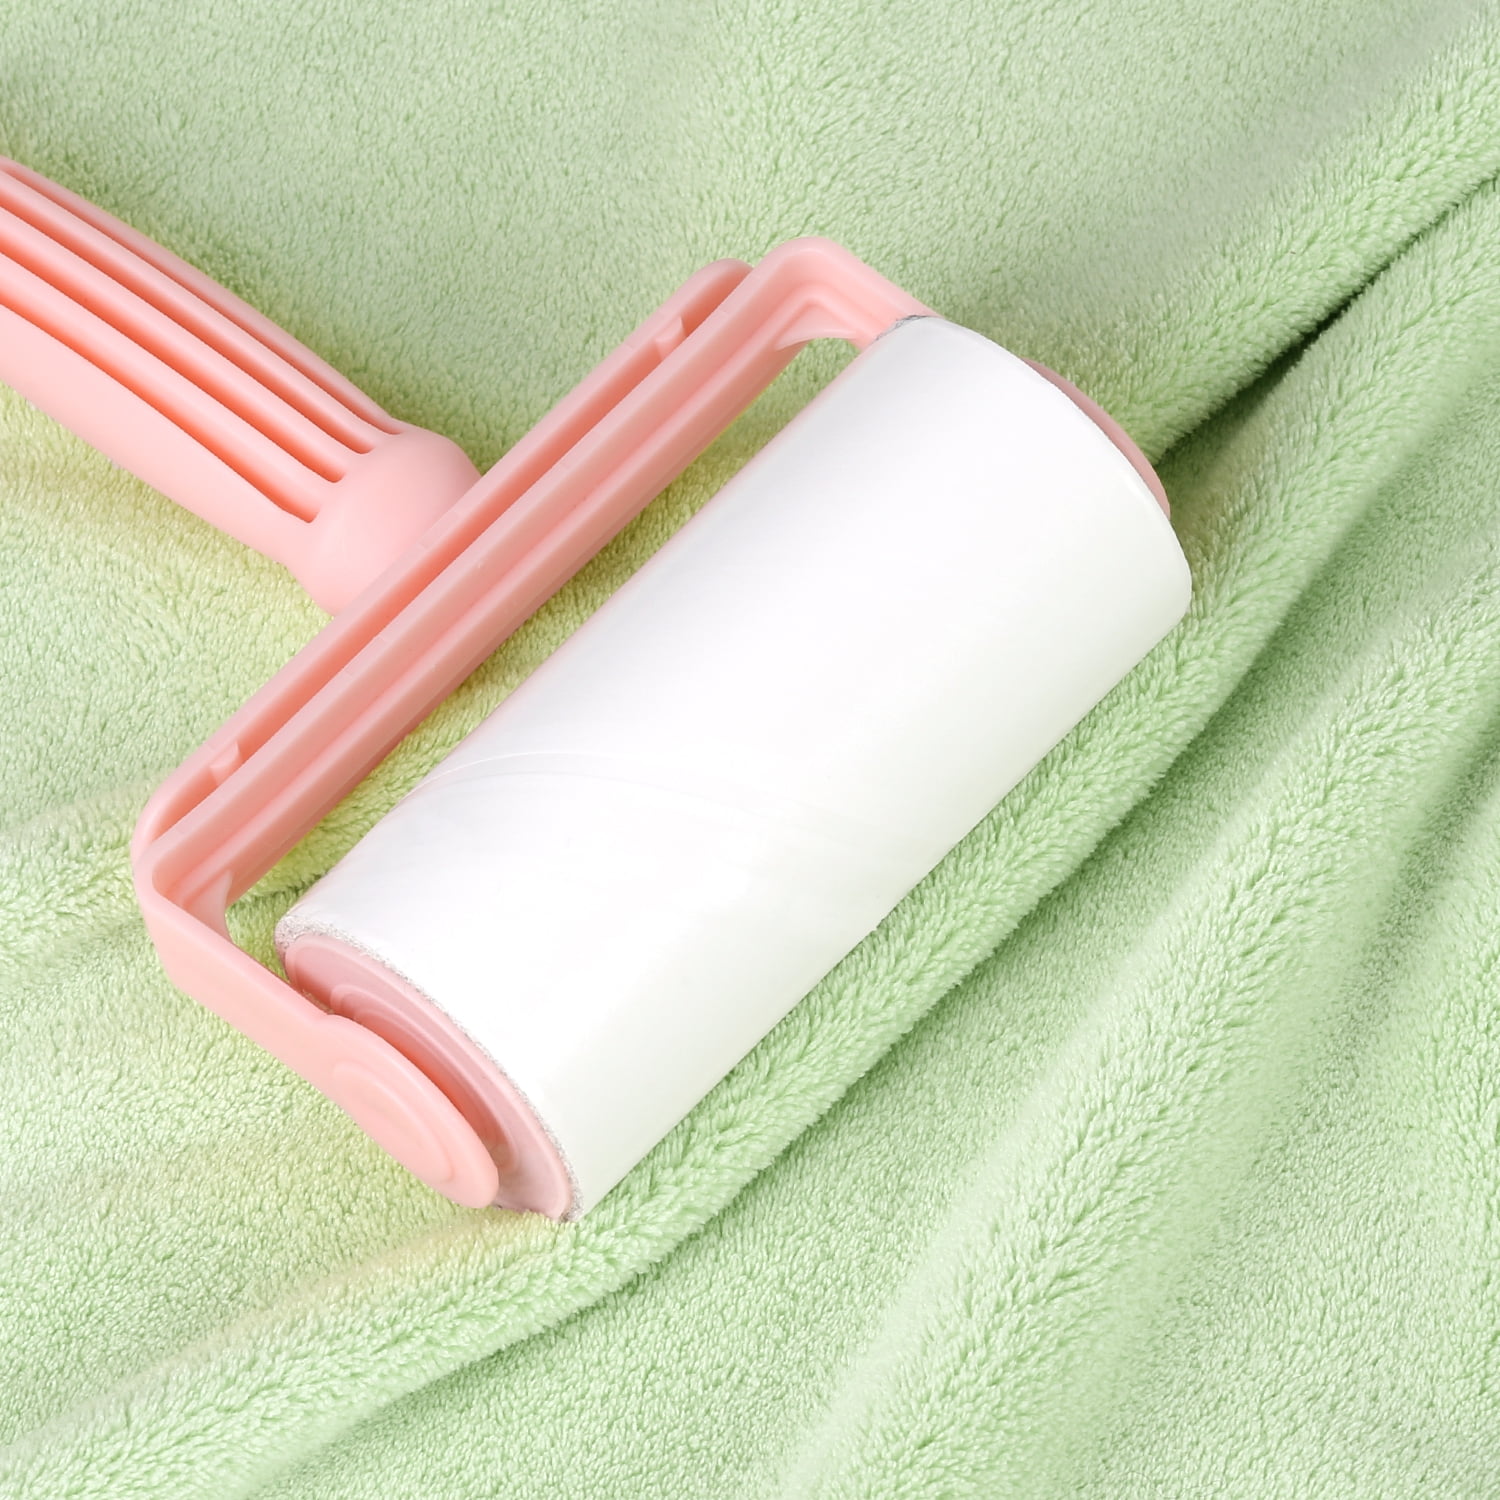 Caya Bath Towels / Japanese Lint-free Bath Towel / Caya Large Soft